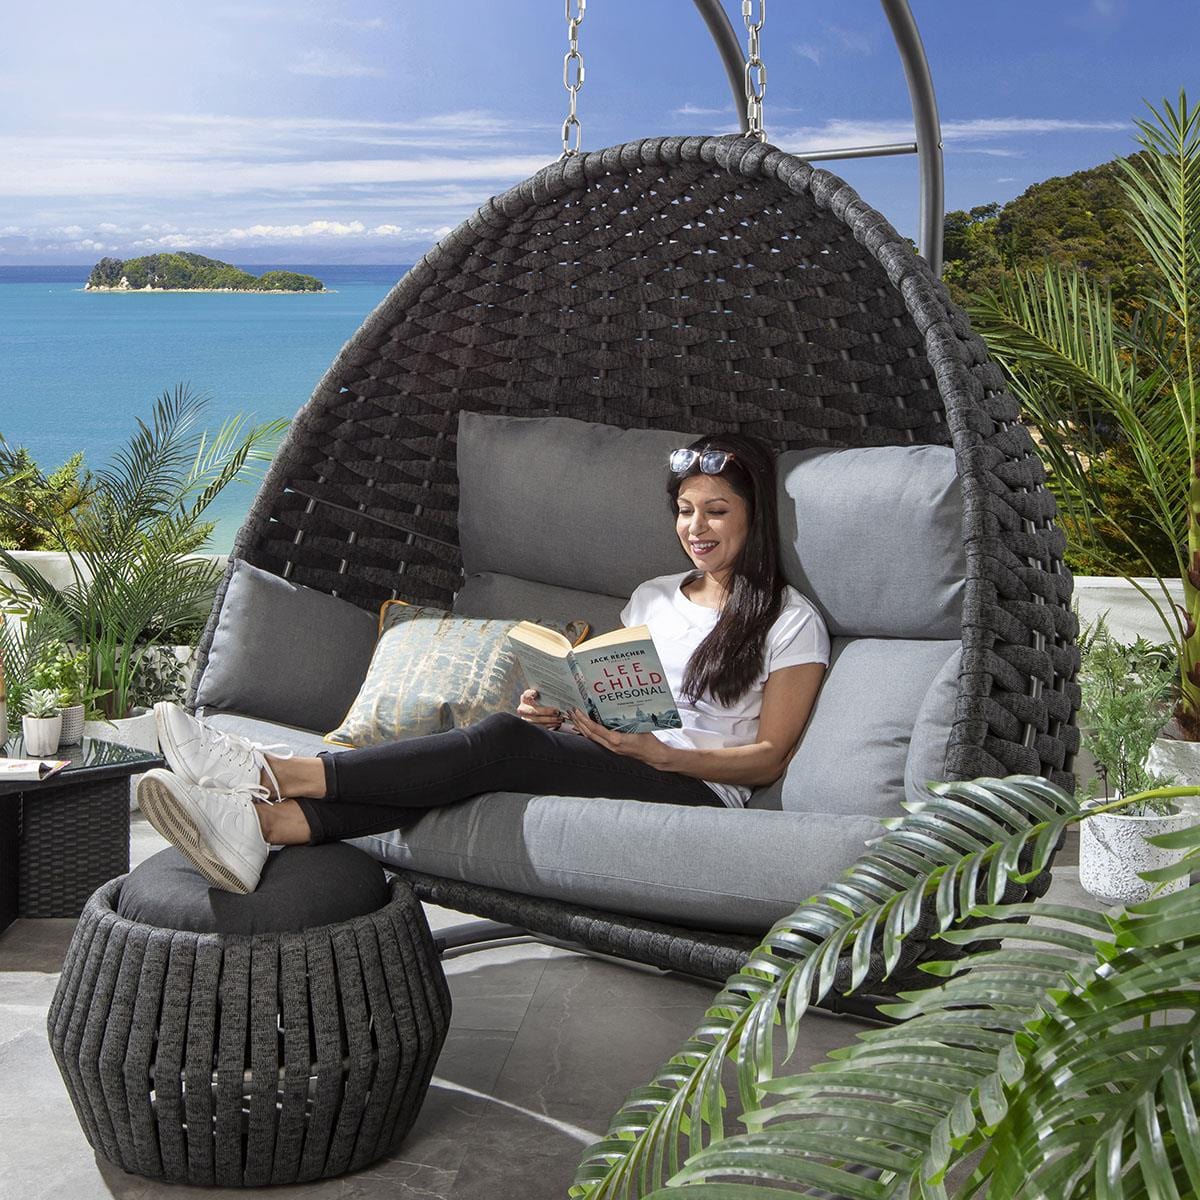 Quatropi Sundowner Round Outdoor Footstool Charcoal 62cm